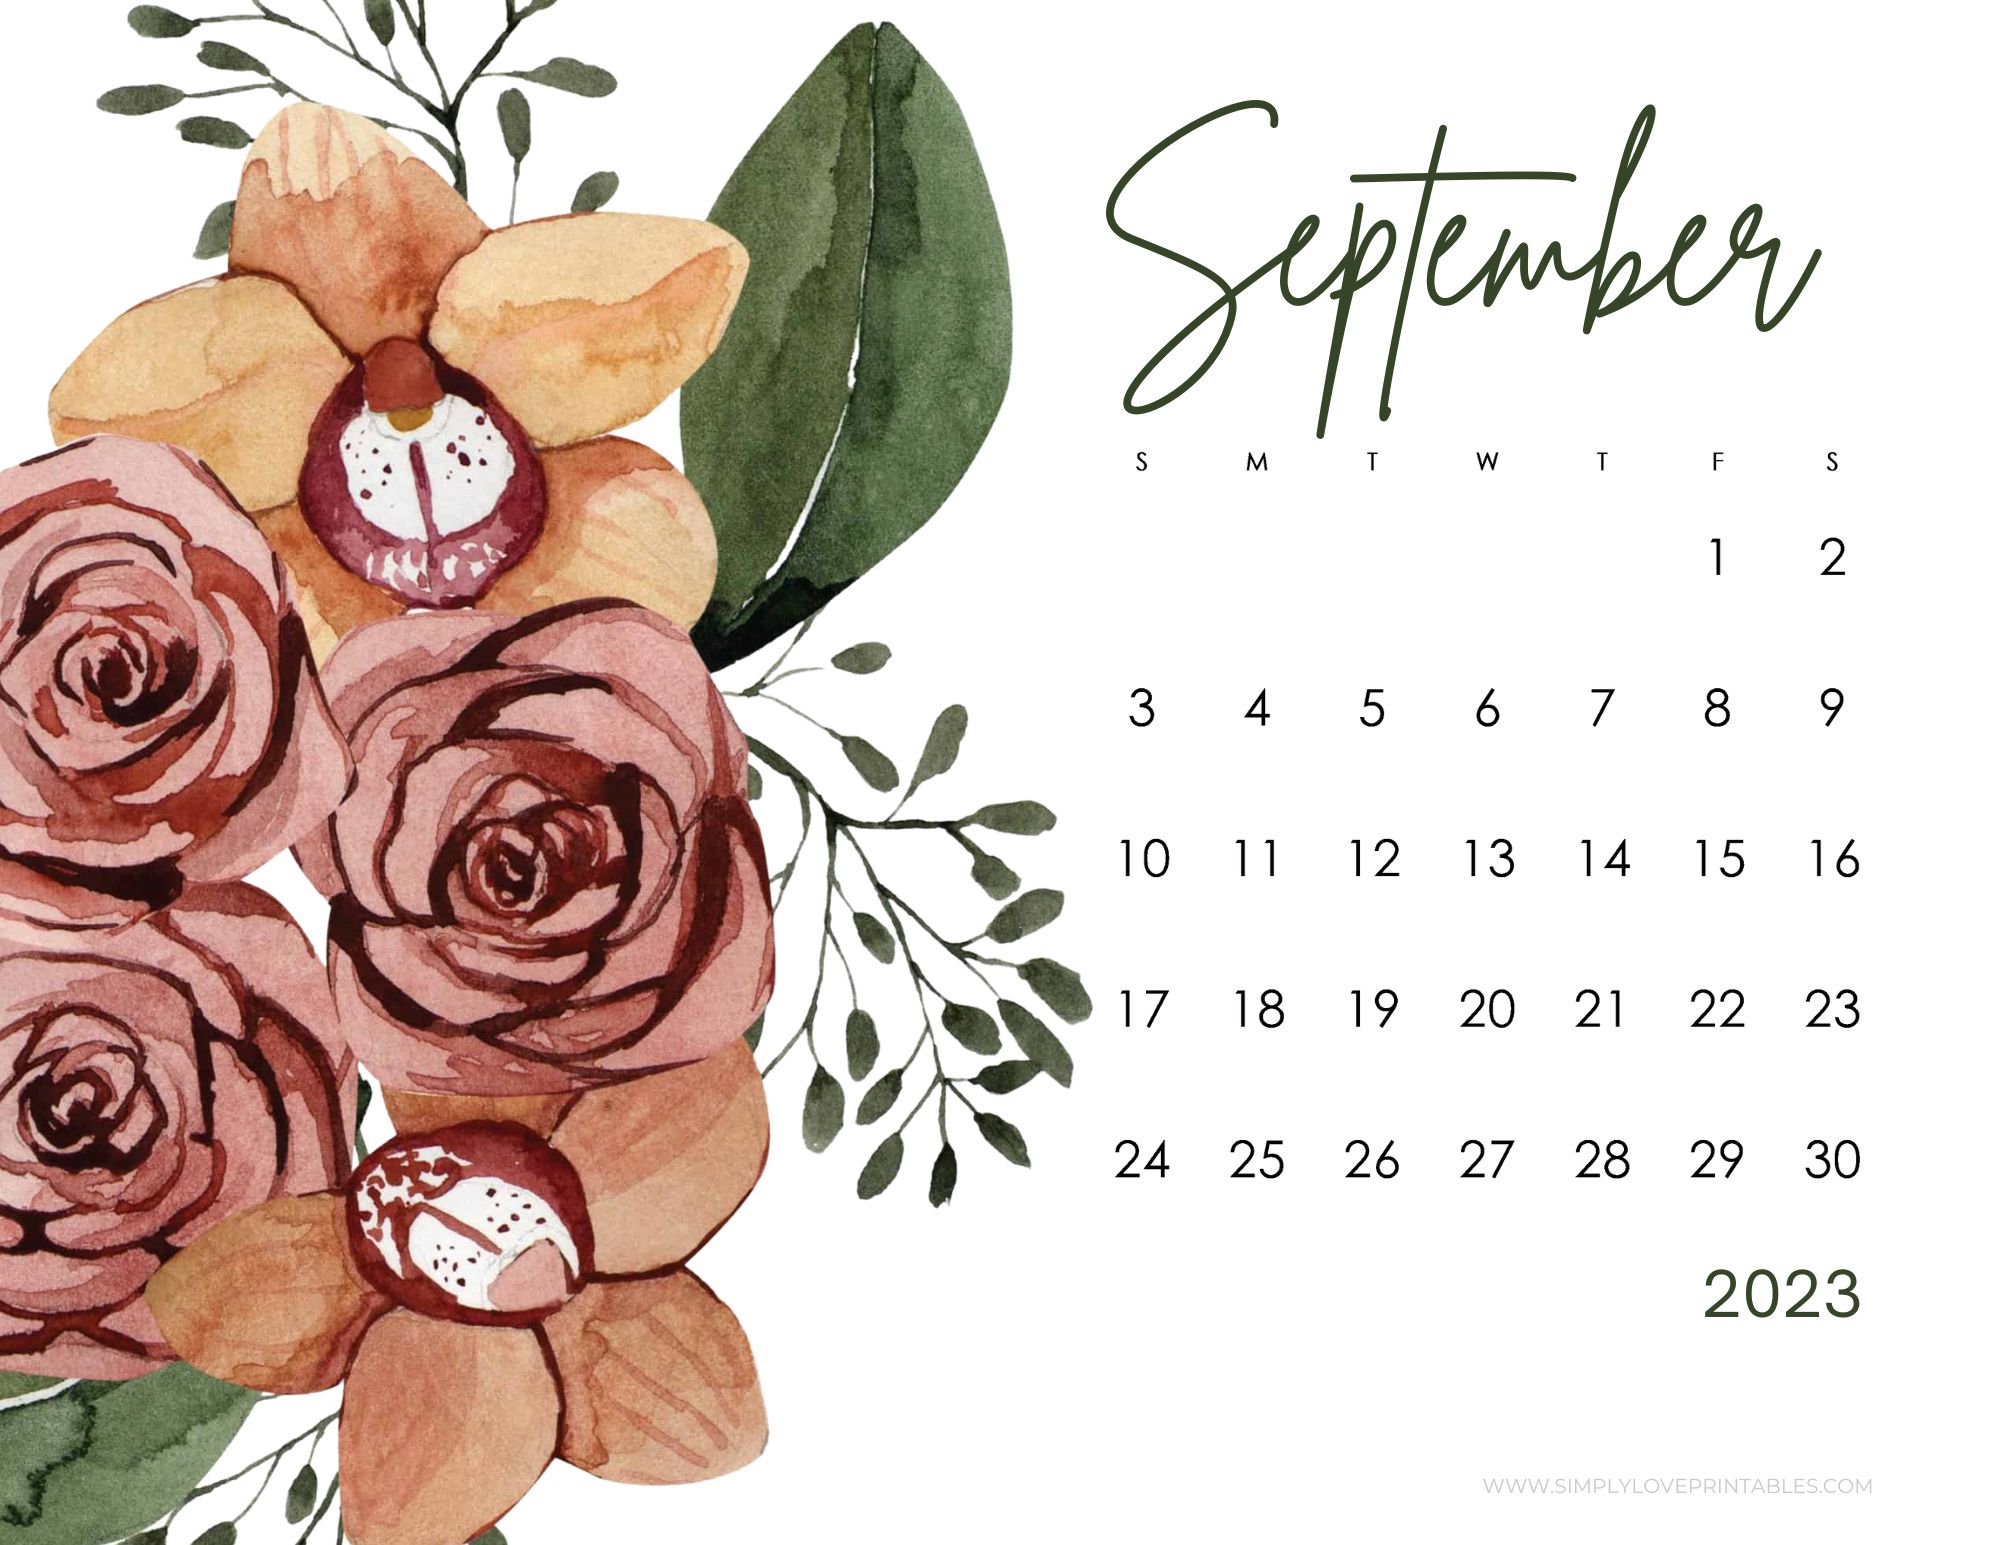 september 2023 calendar floral